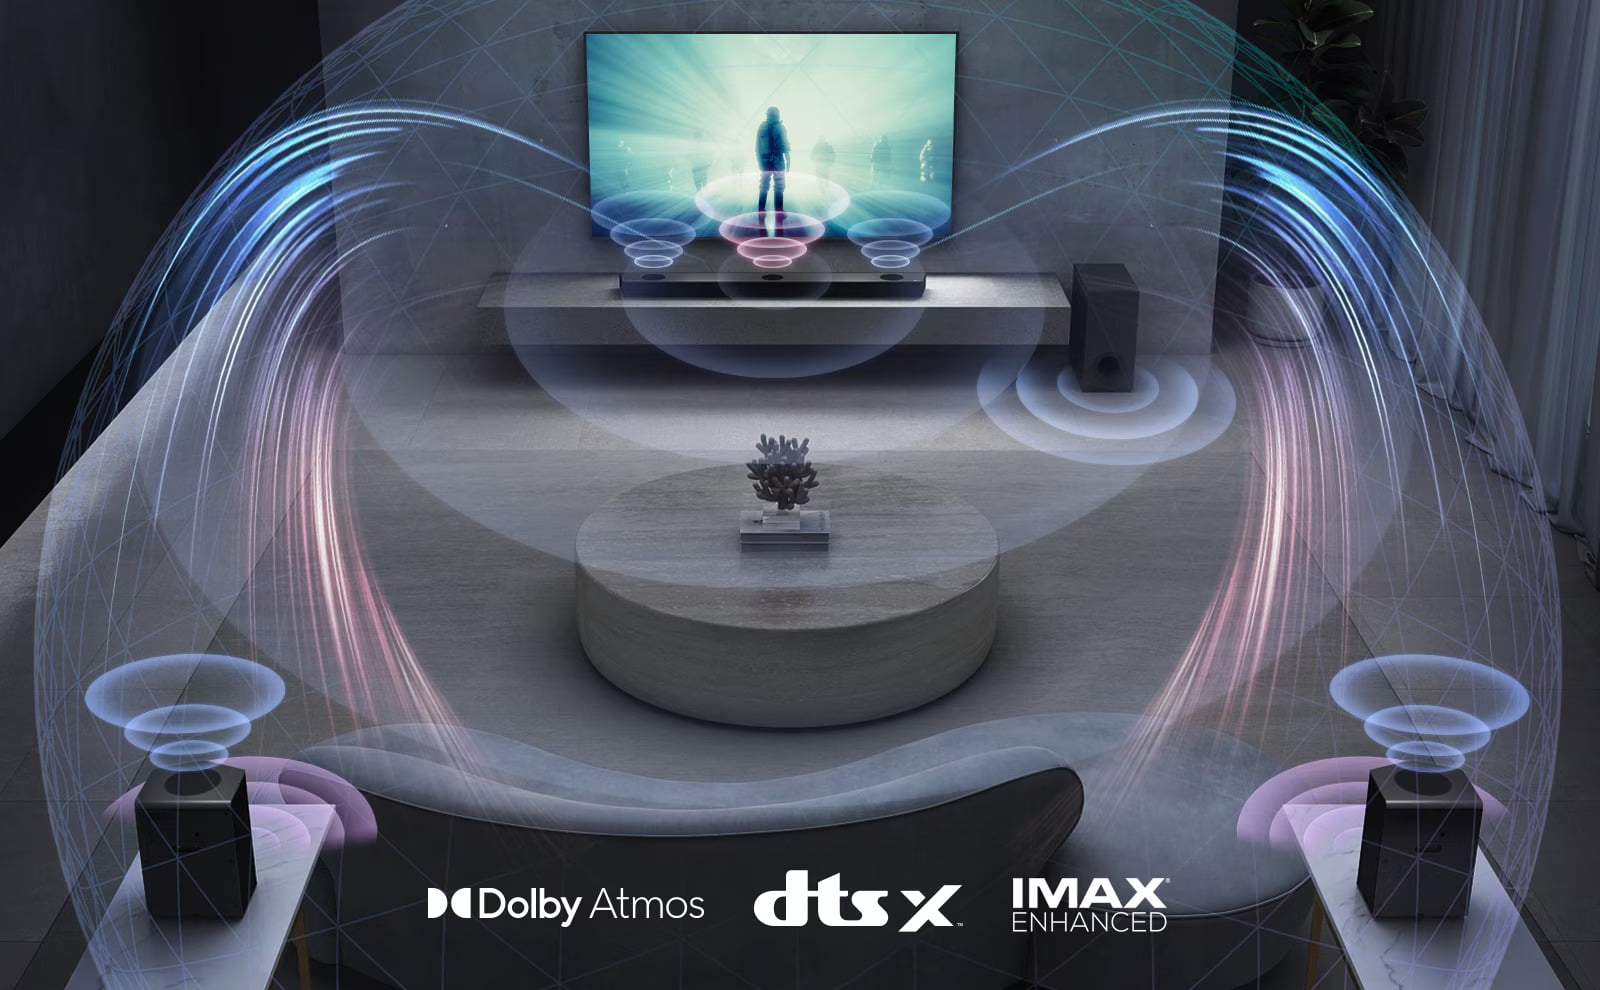 LG's latest high-end soundbars support IMAX Enhanced (Model supporting IMAX Enhanced: S95QR)